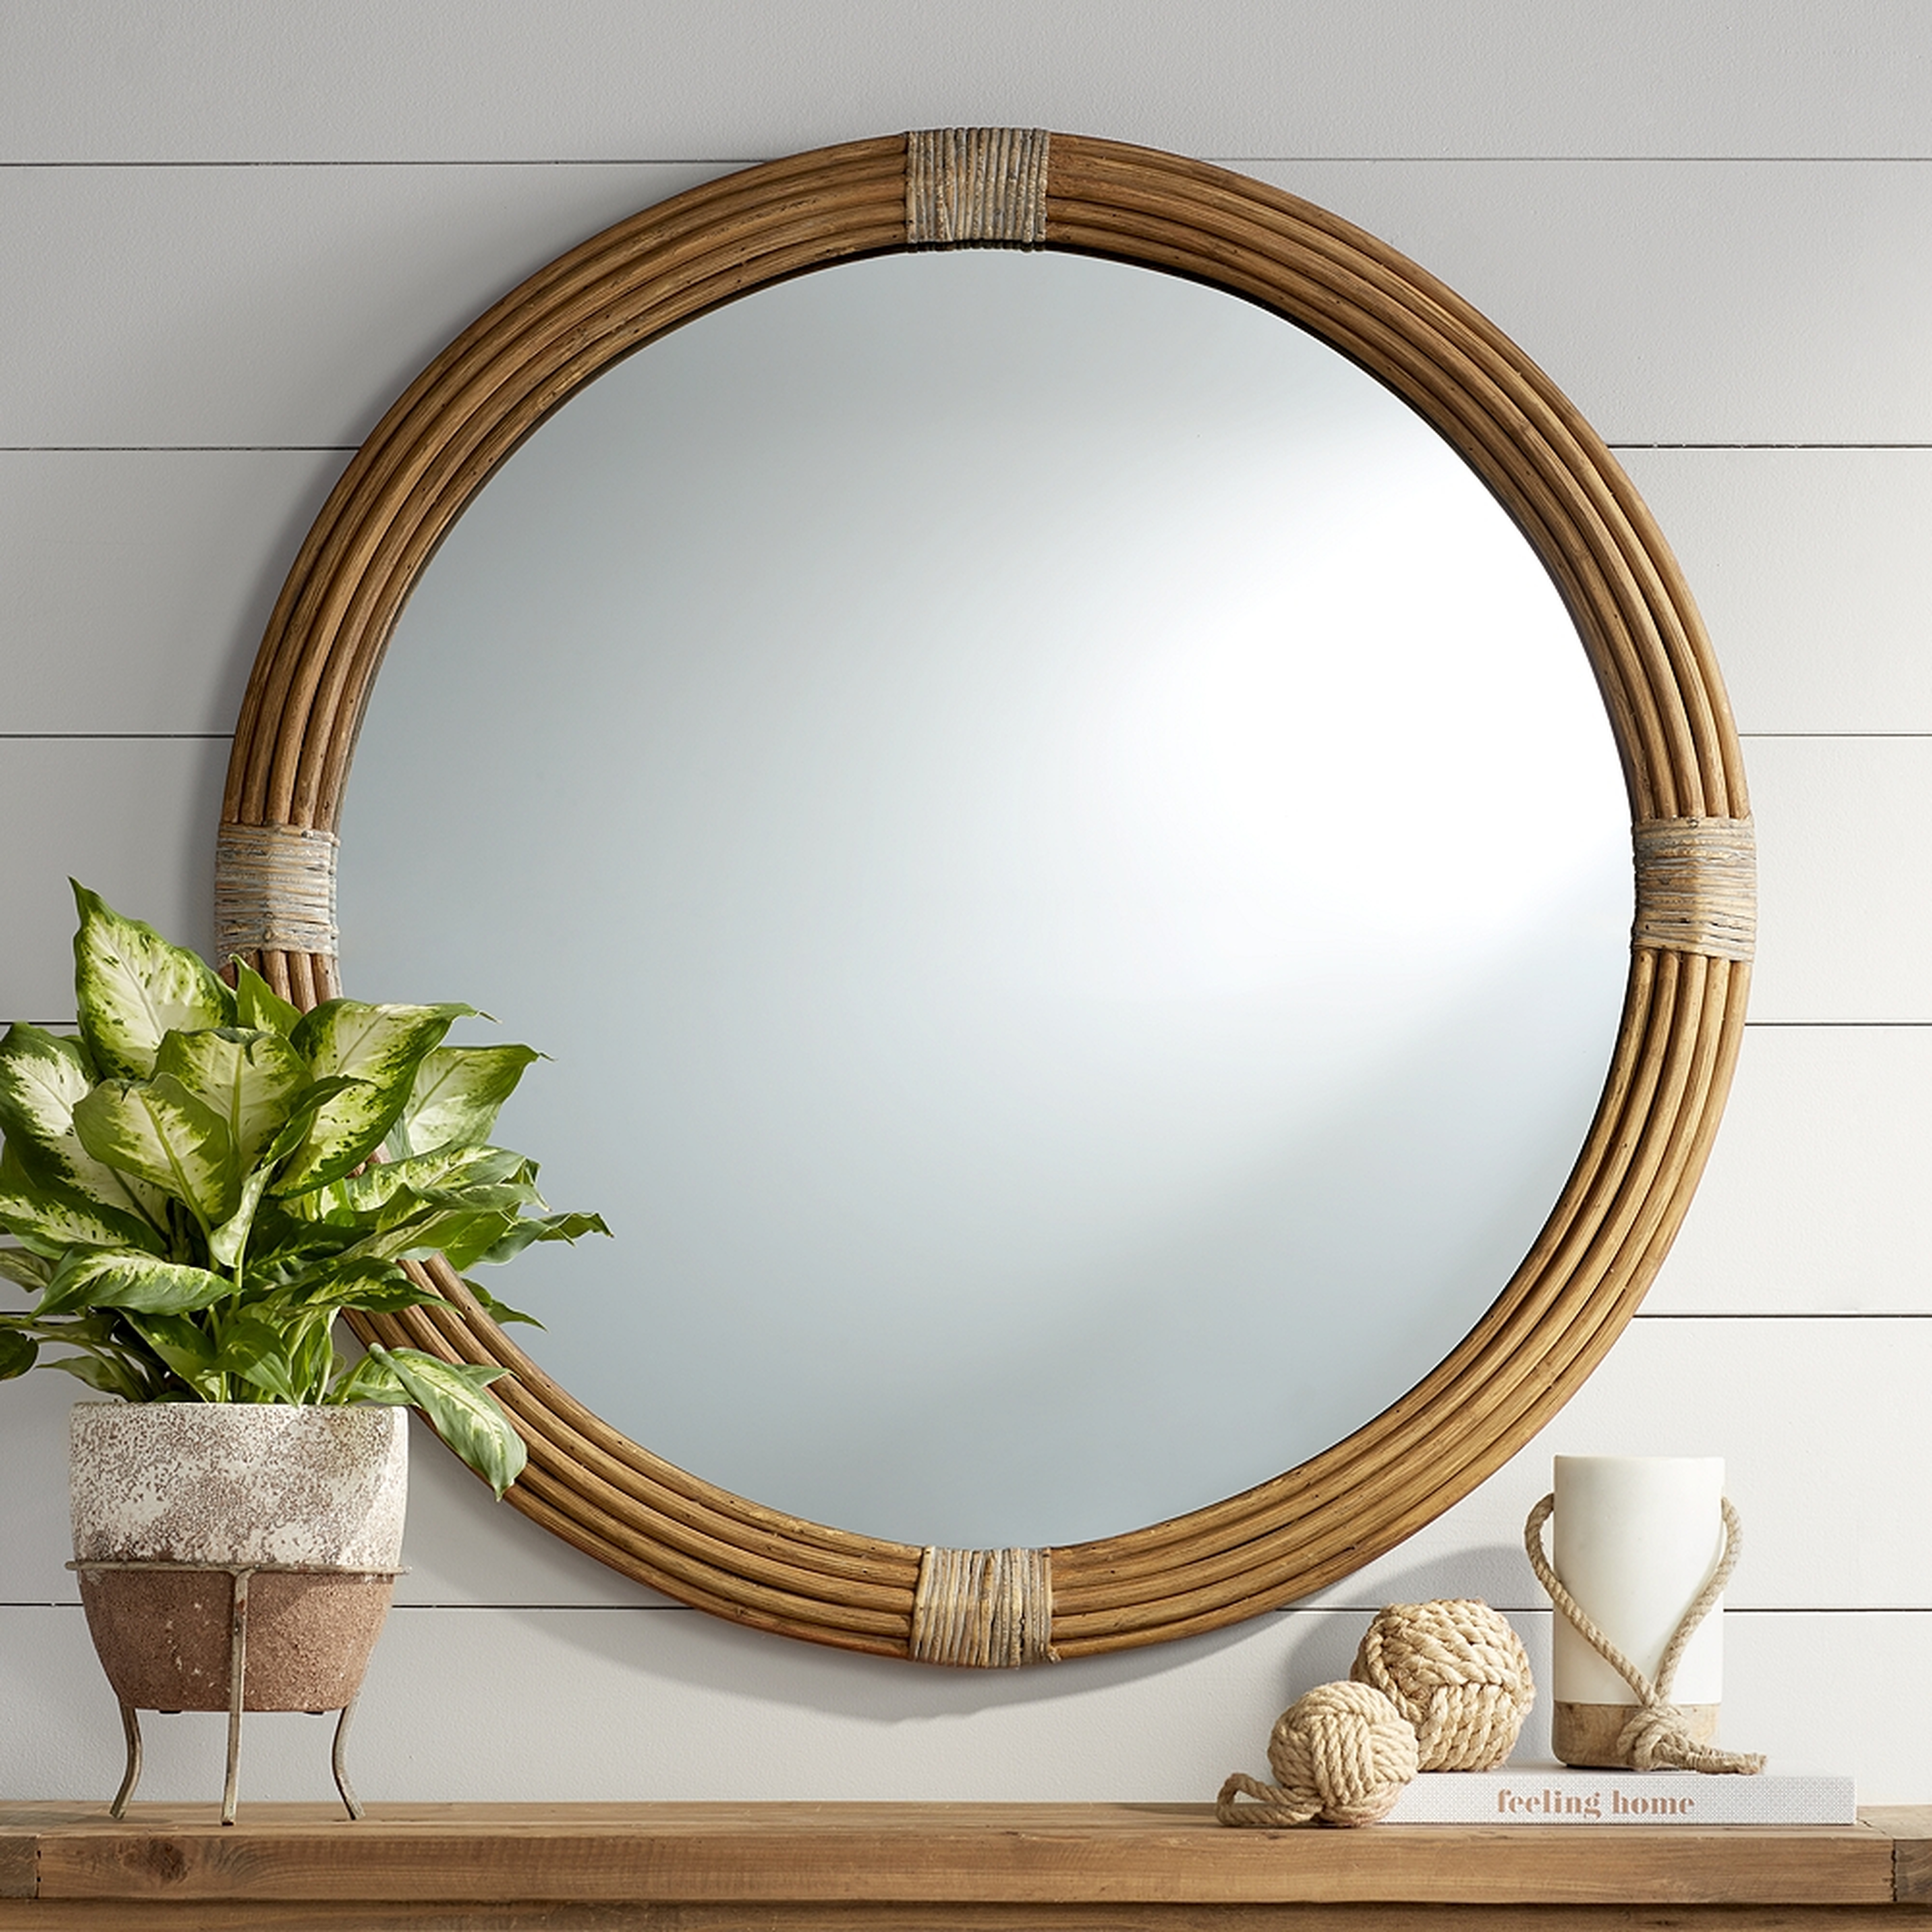 Lyla Dark Brown Rattan 38" Round Wall Mirror - Style # 76H02 - Lamps Plus